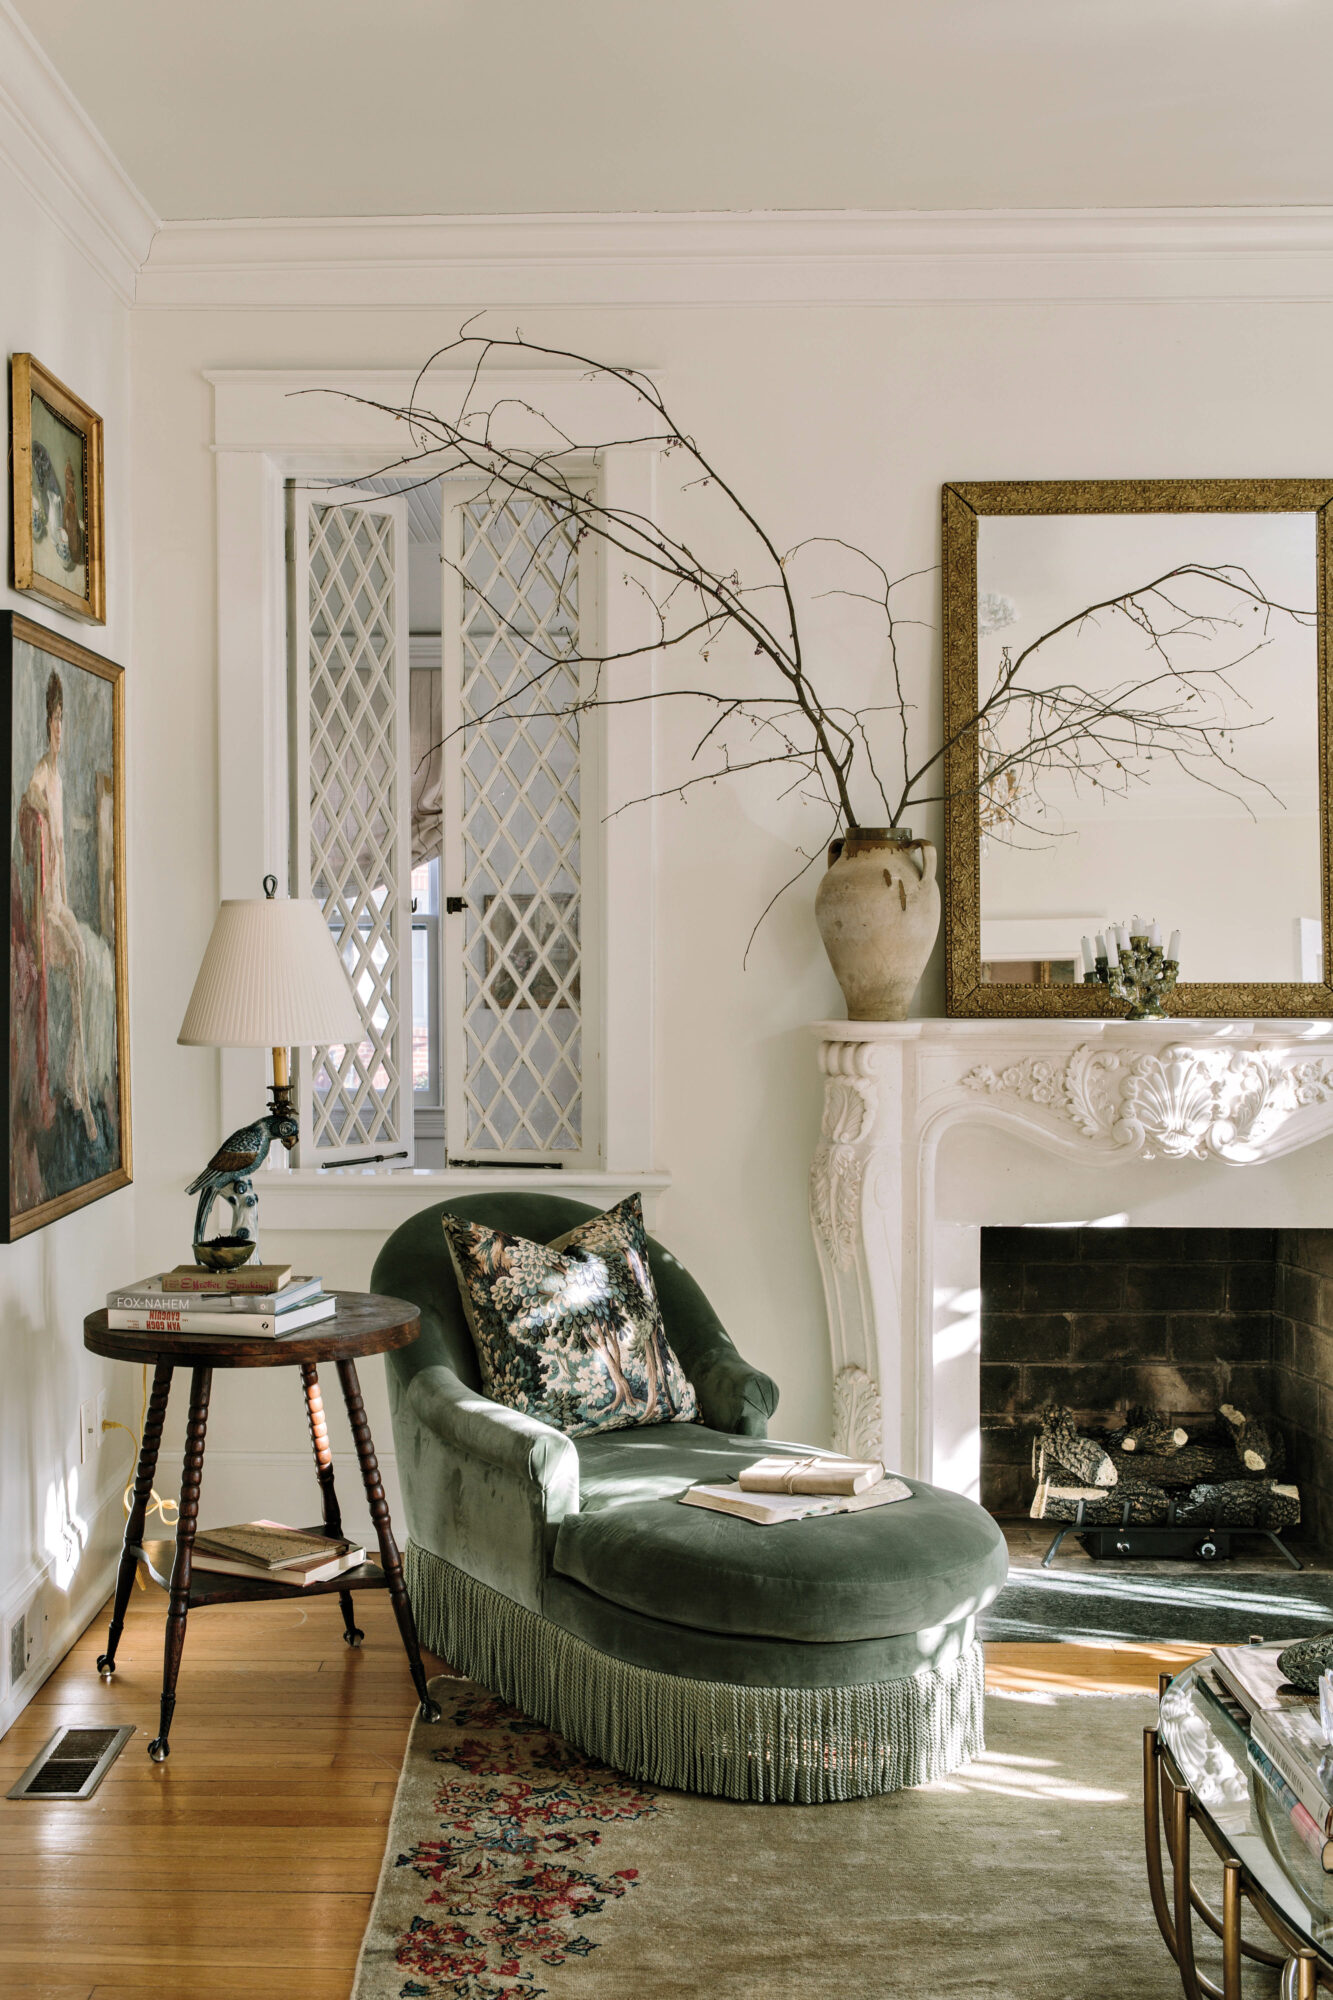 Living room corner with green-velvet chaise underneath an interior window with white latticework